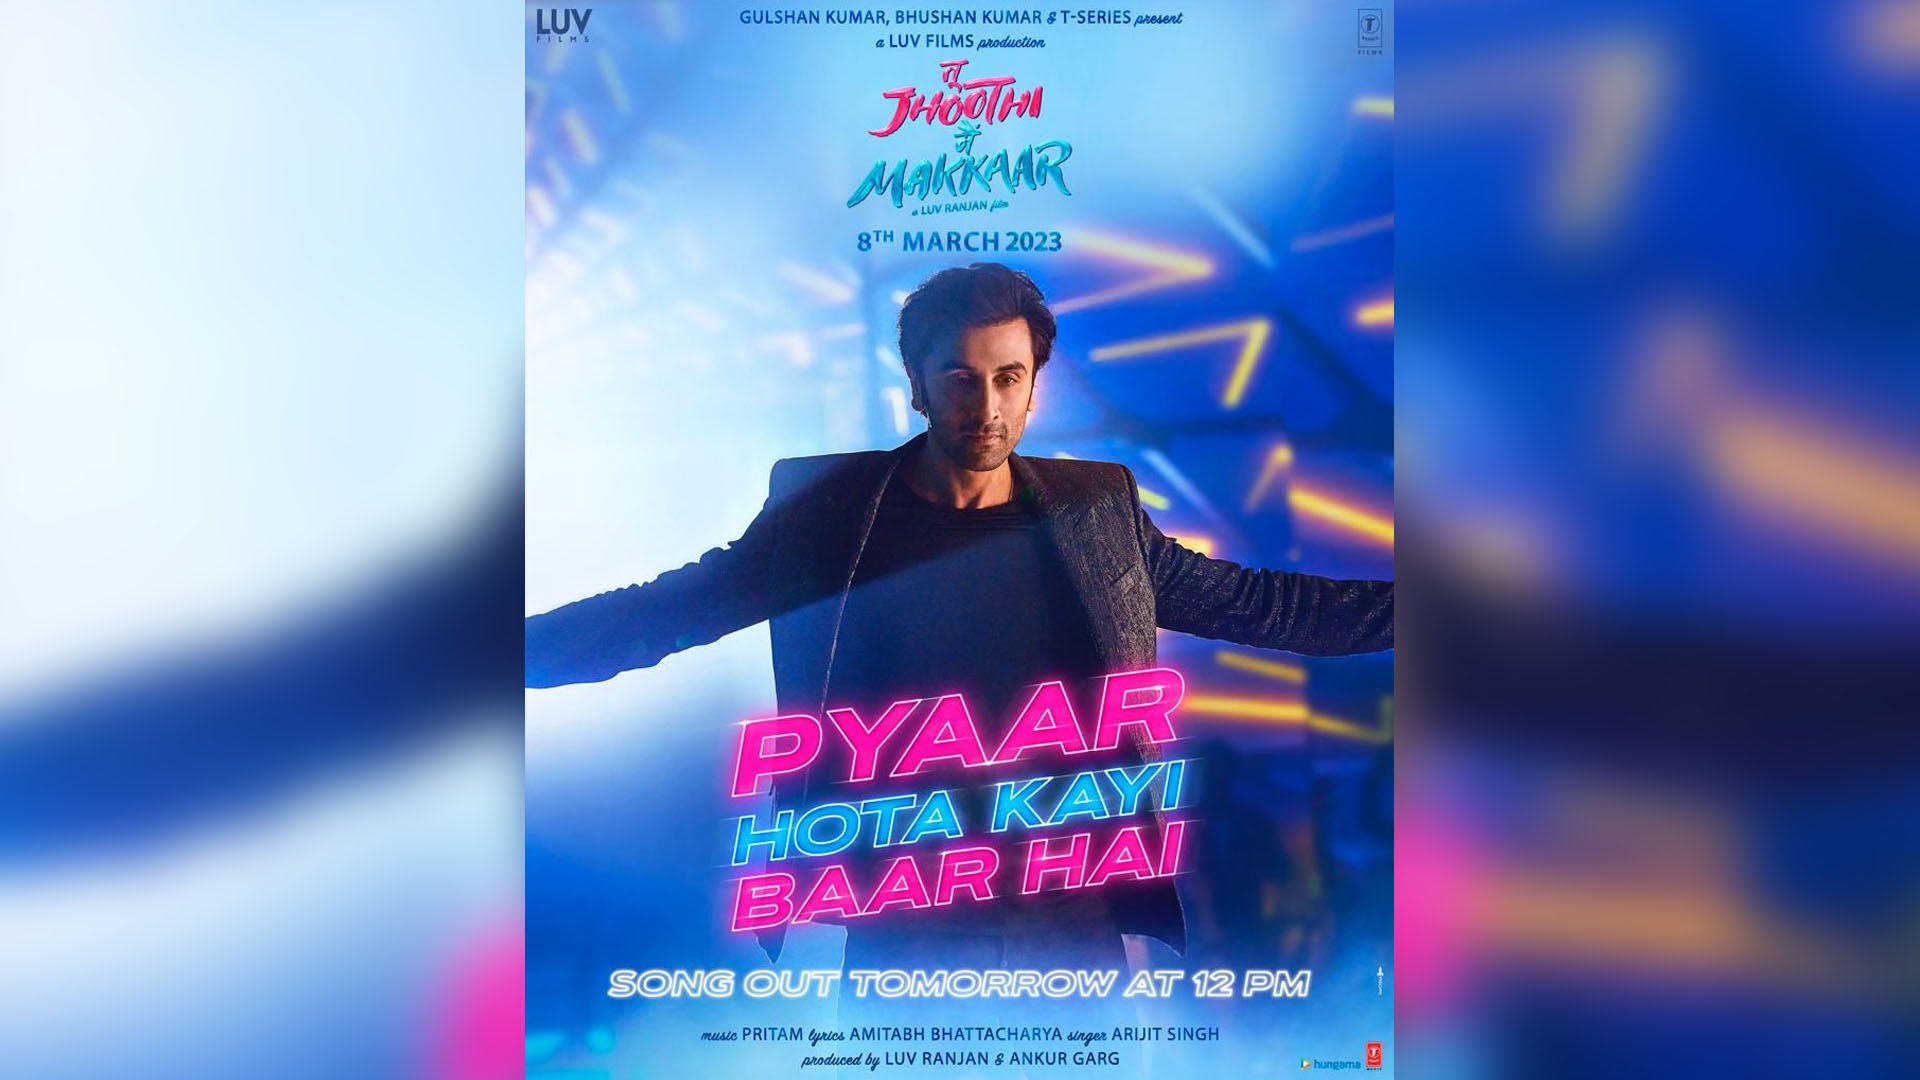 Watch Ranbir Kapoor as Makkaar in full flare, fun and swag in the upcoming song ‘Pyaar Hota Kayi Baar Hai’; Poster is out now!